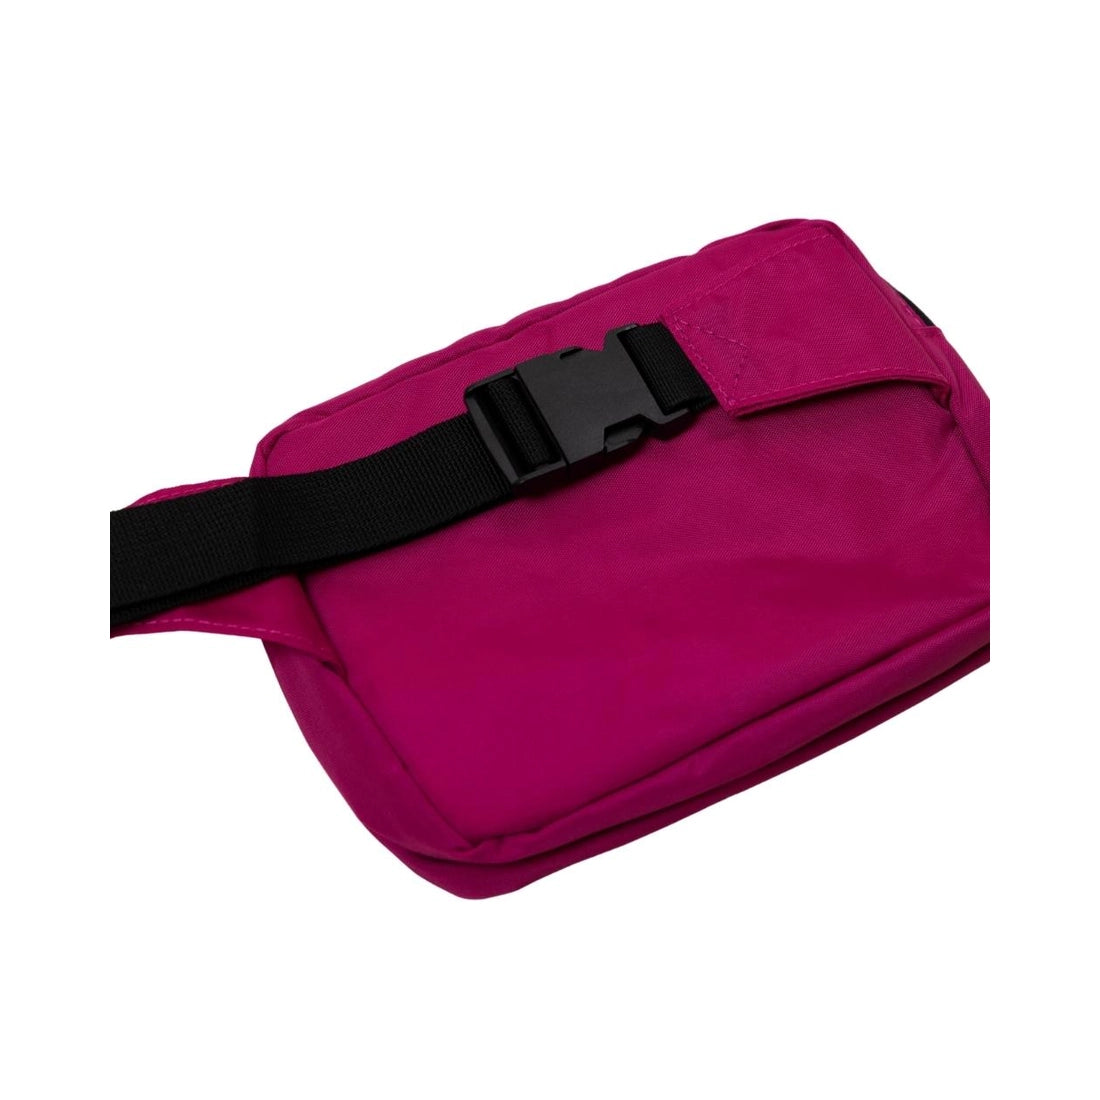 Bebe NEW Josephine Croco Convertible Sling Belt Fanny Pack / Sling Bag  Purse Dusty Pink 